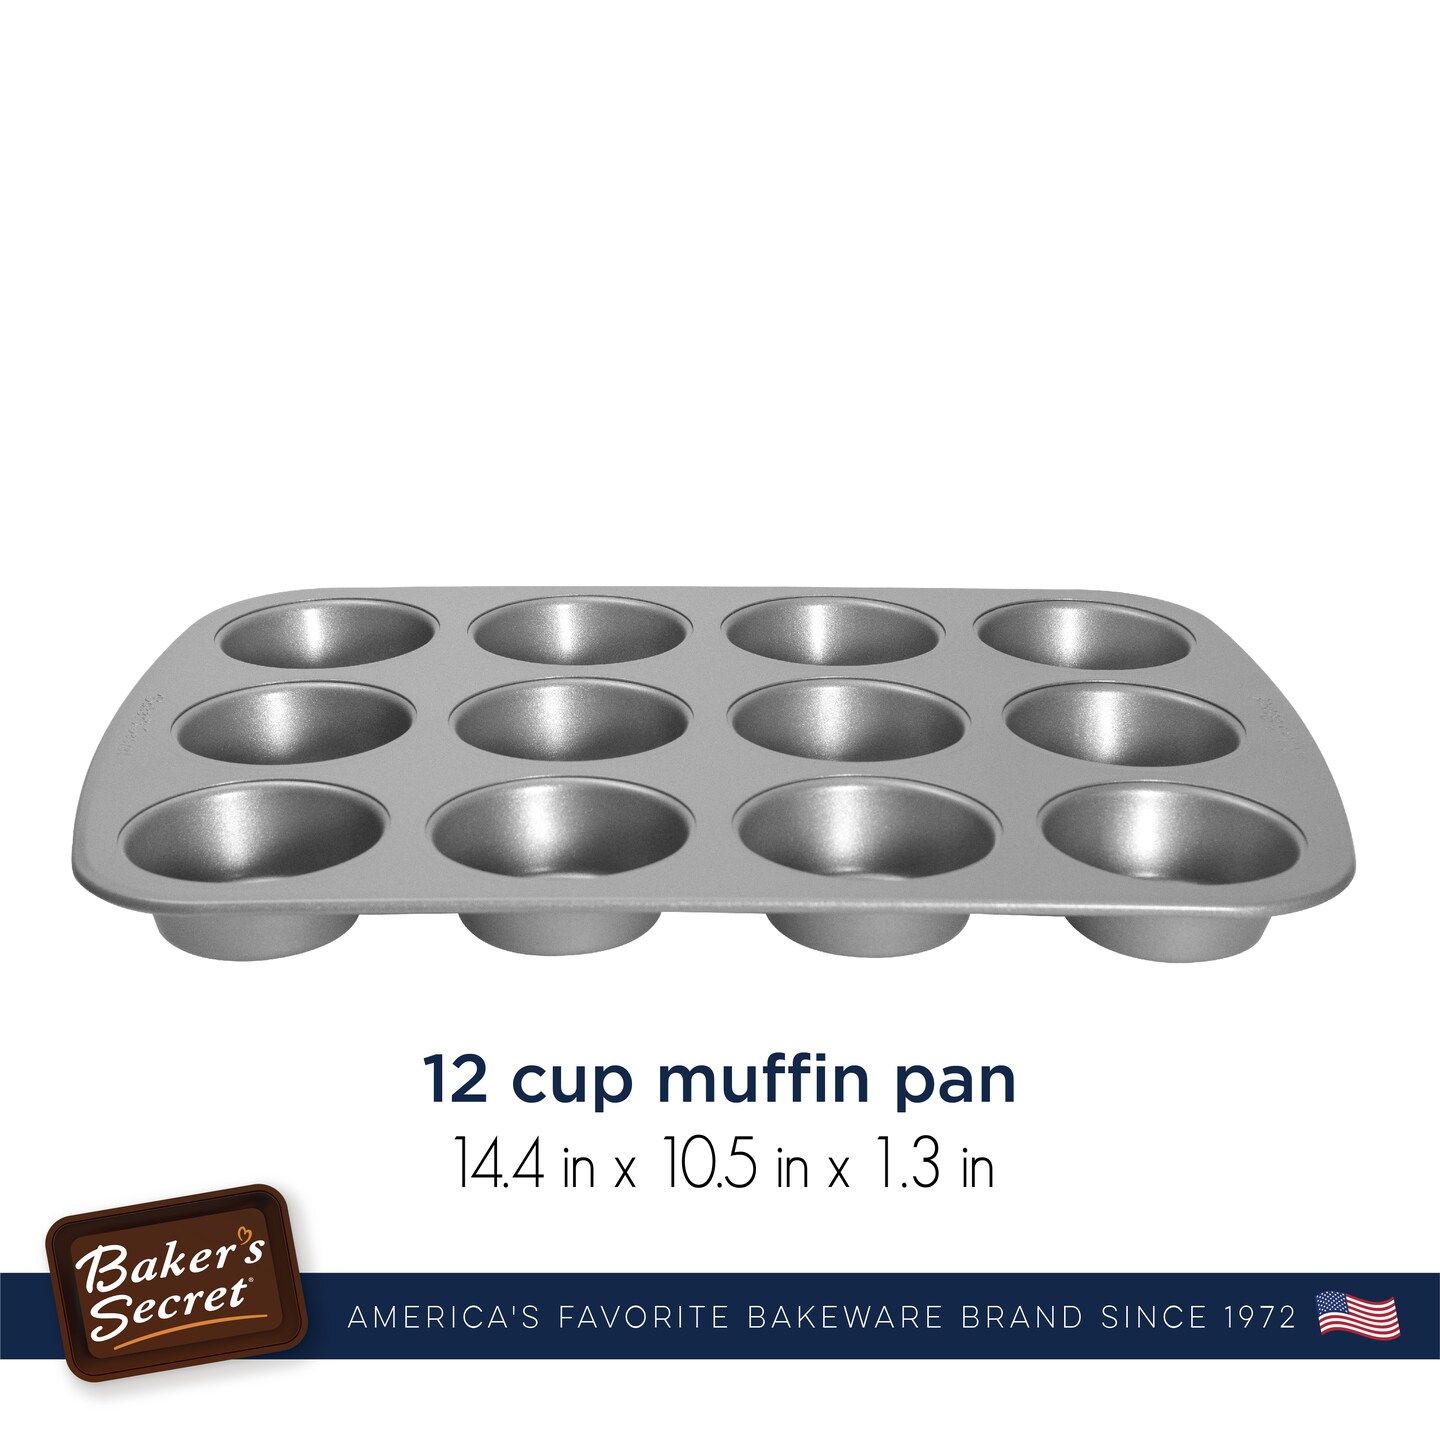 Baker's Secret Muffin Pan